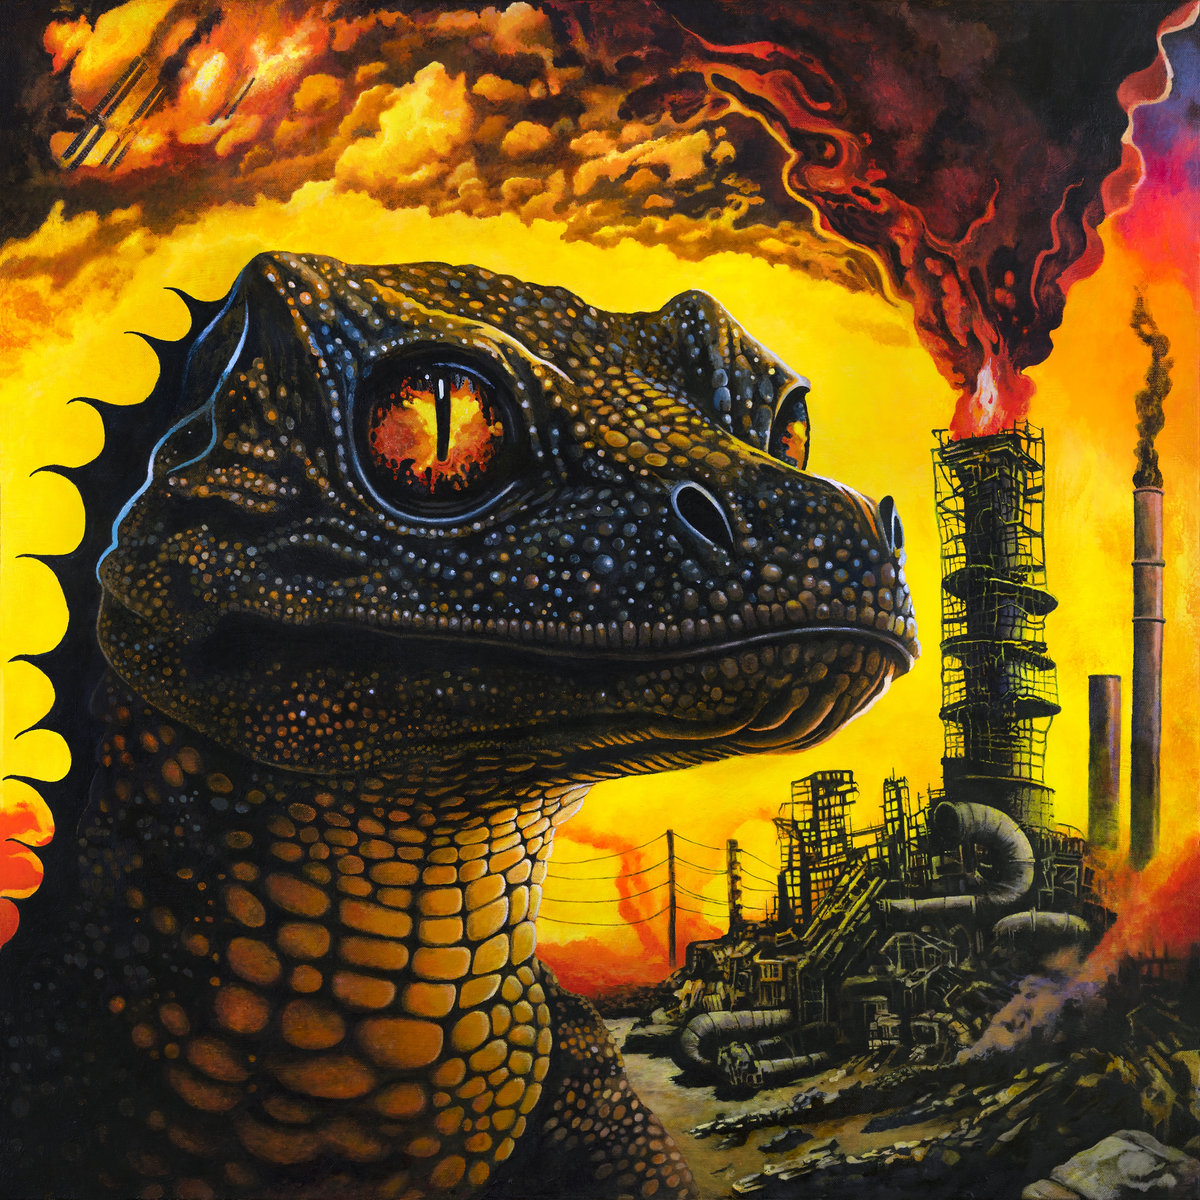 Godzilla Roar (Sound Effect) - song and lyrics by Hollywood Sound Effects